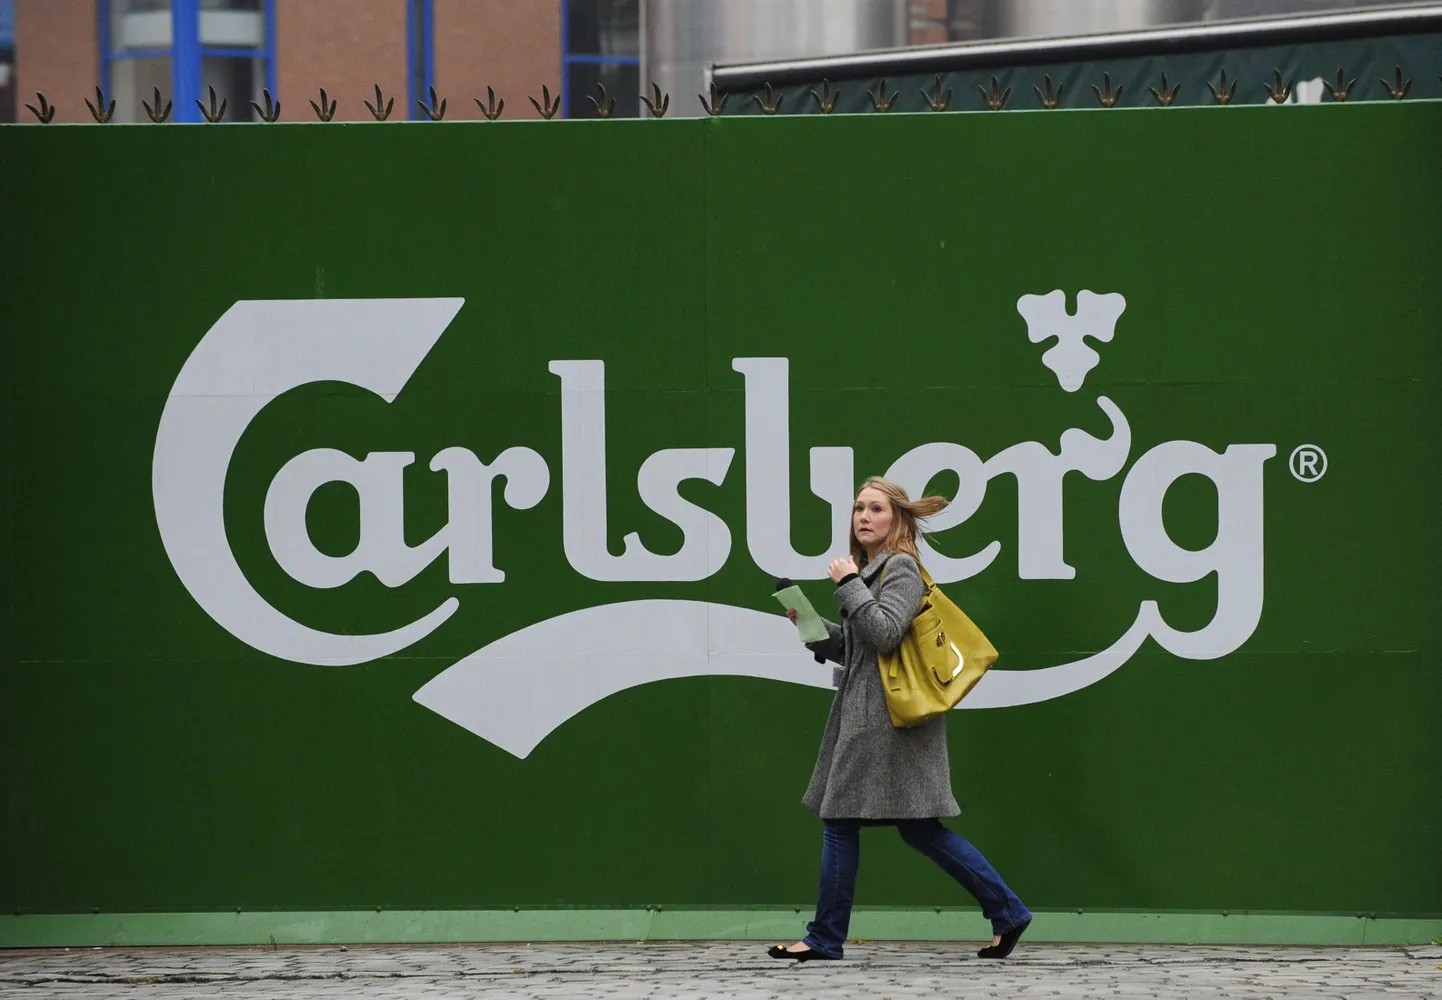 Carlsbergi plakat Inglismaal